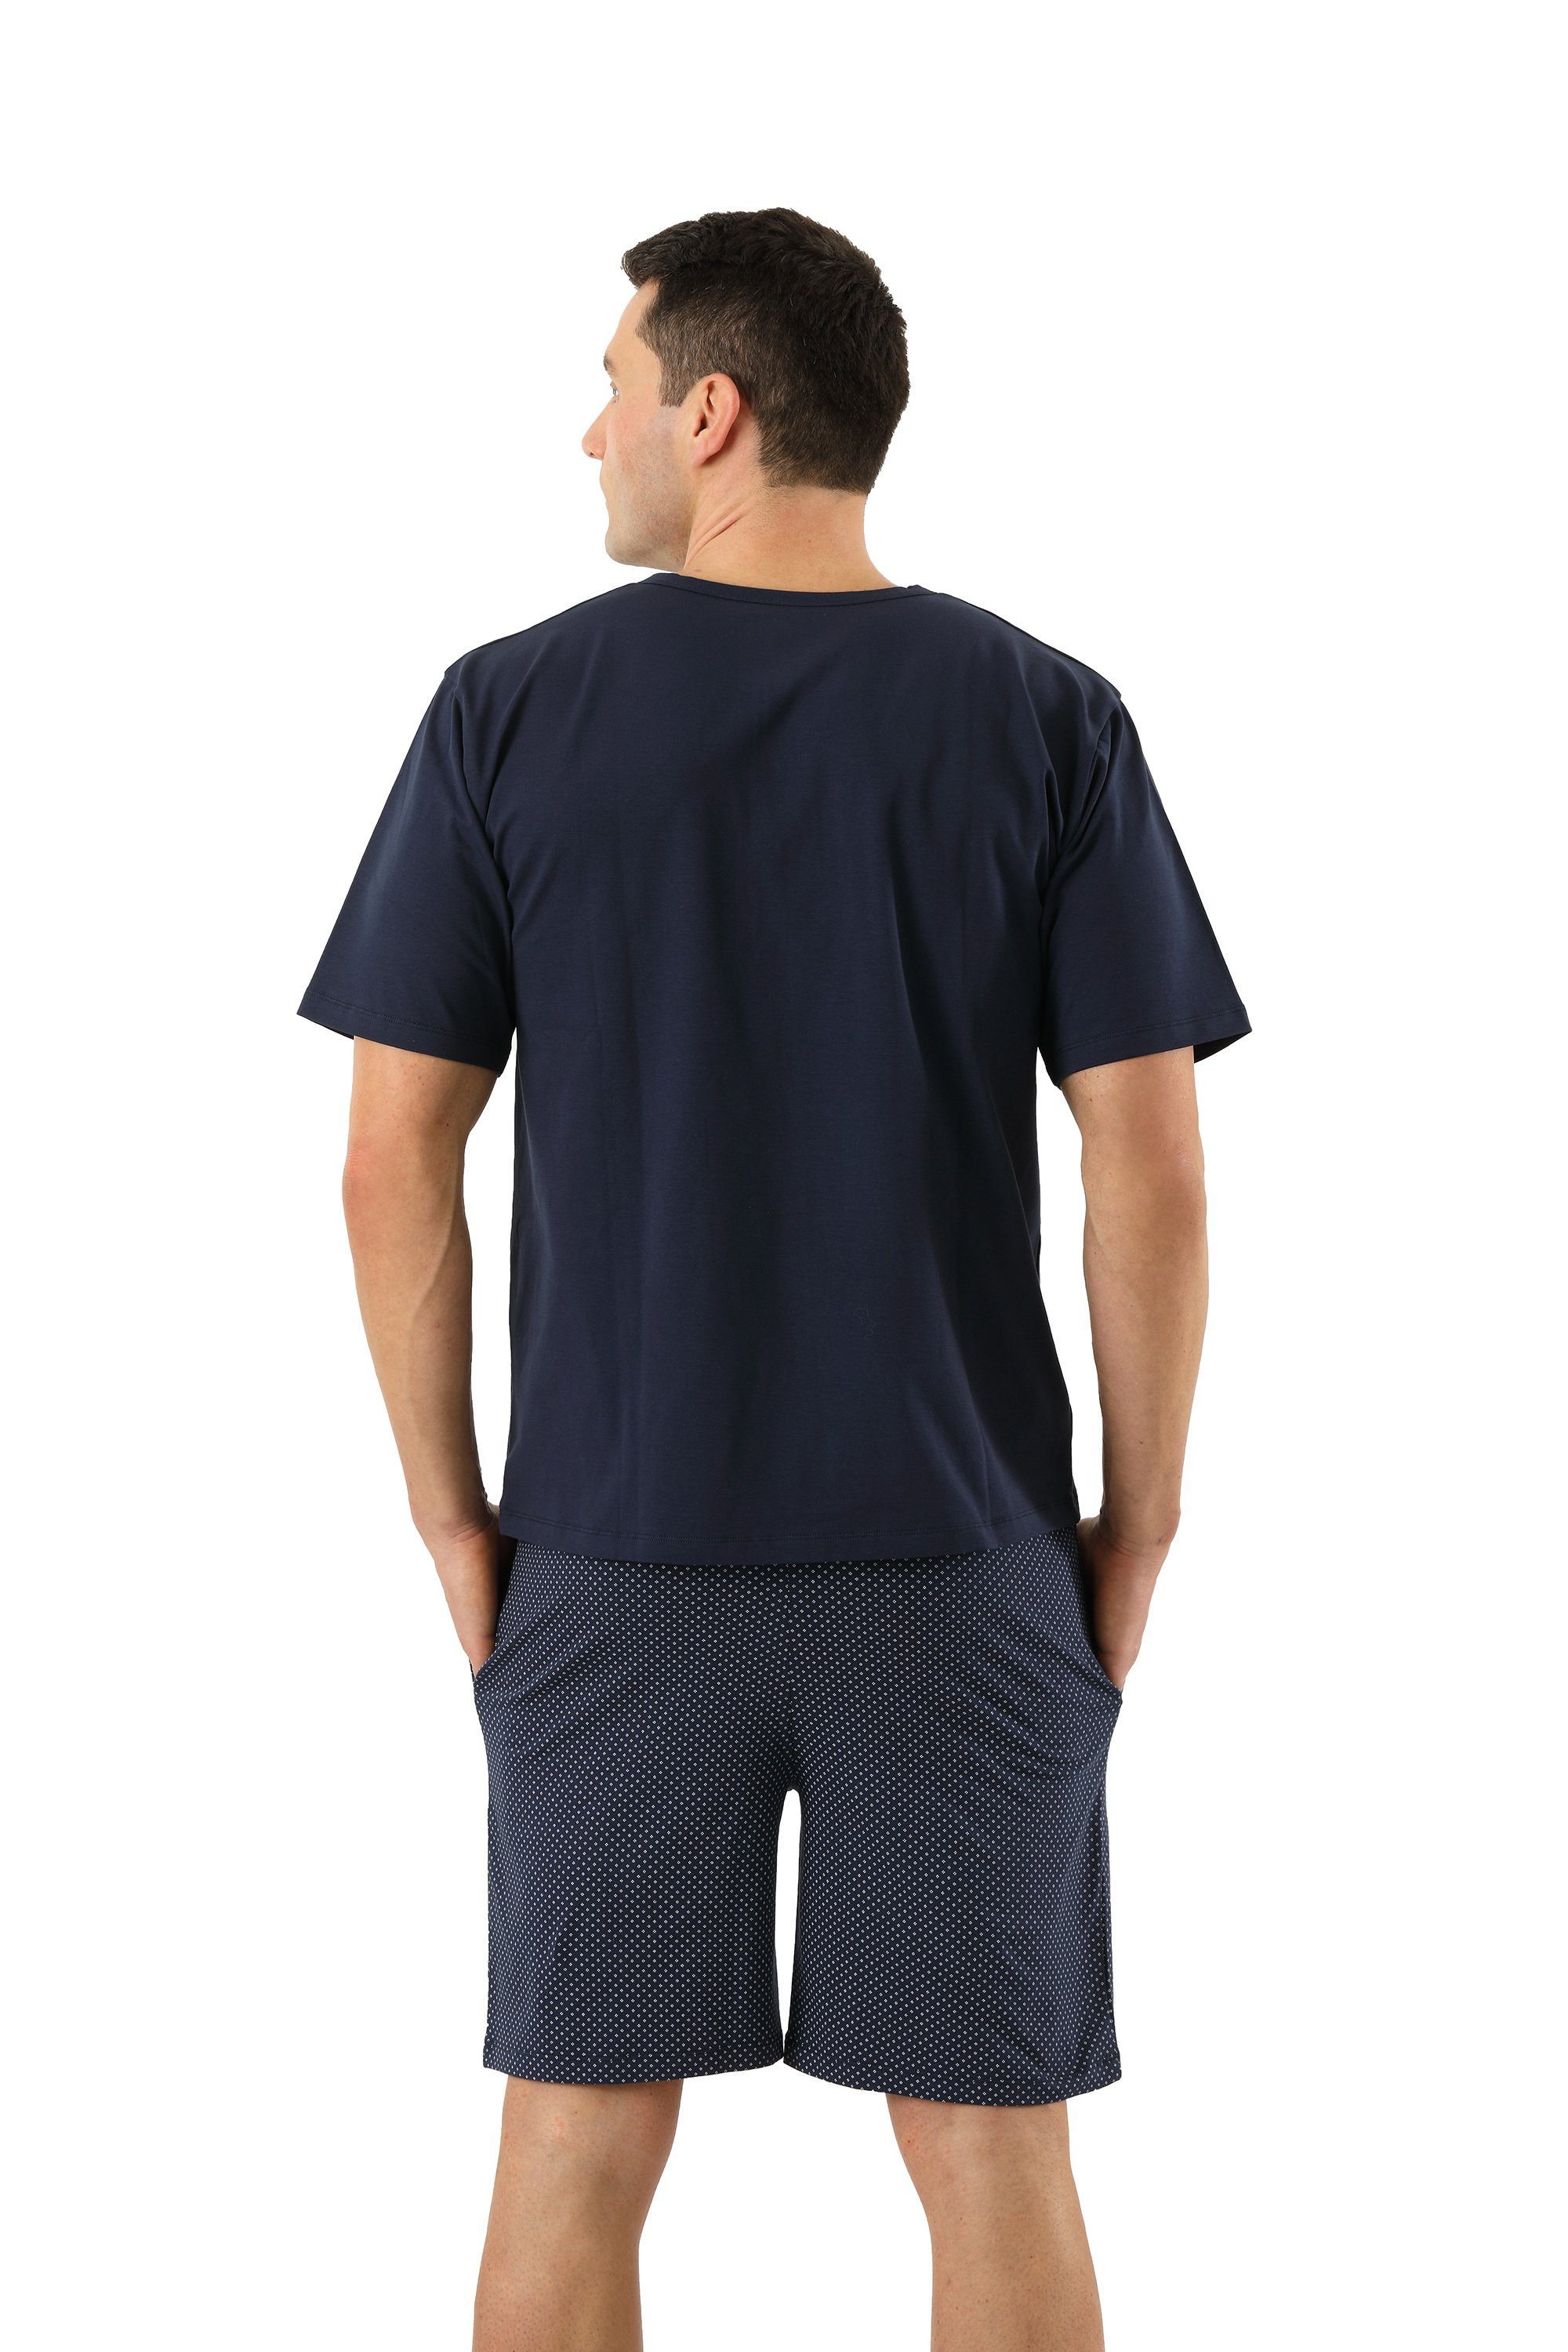 Albert Kreuz Schlafanzug Pyjama Set kurz aus (1 Hose) und bestehend Oberteil atmungsaktiv